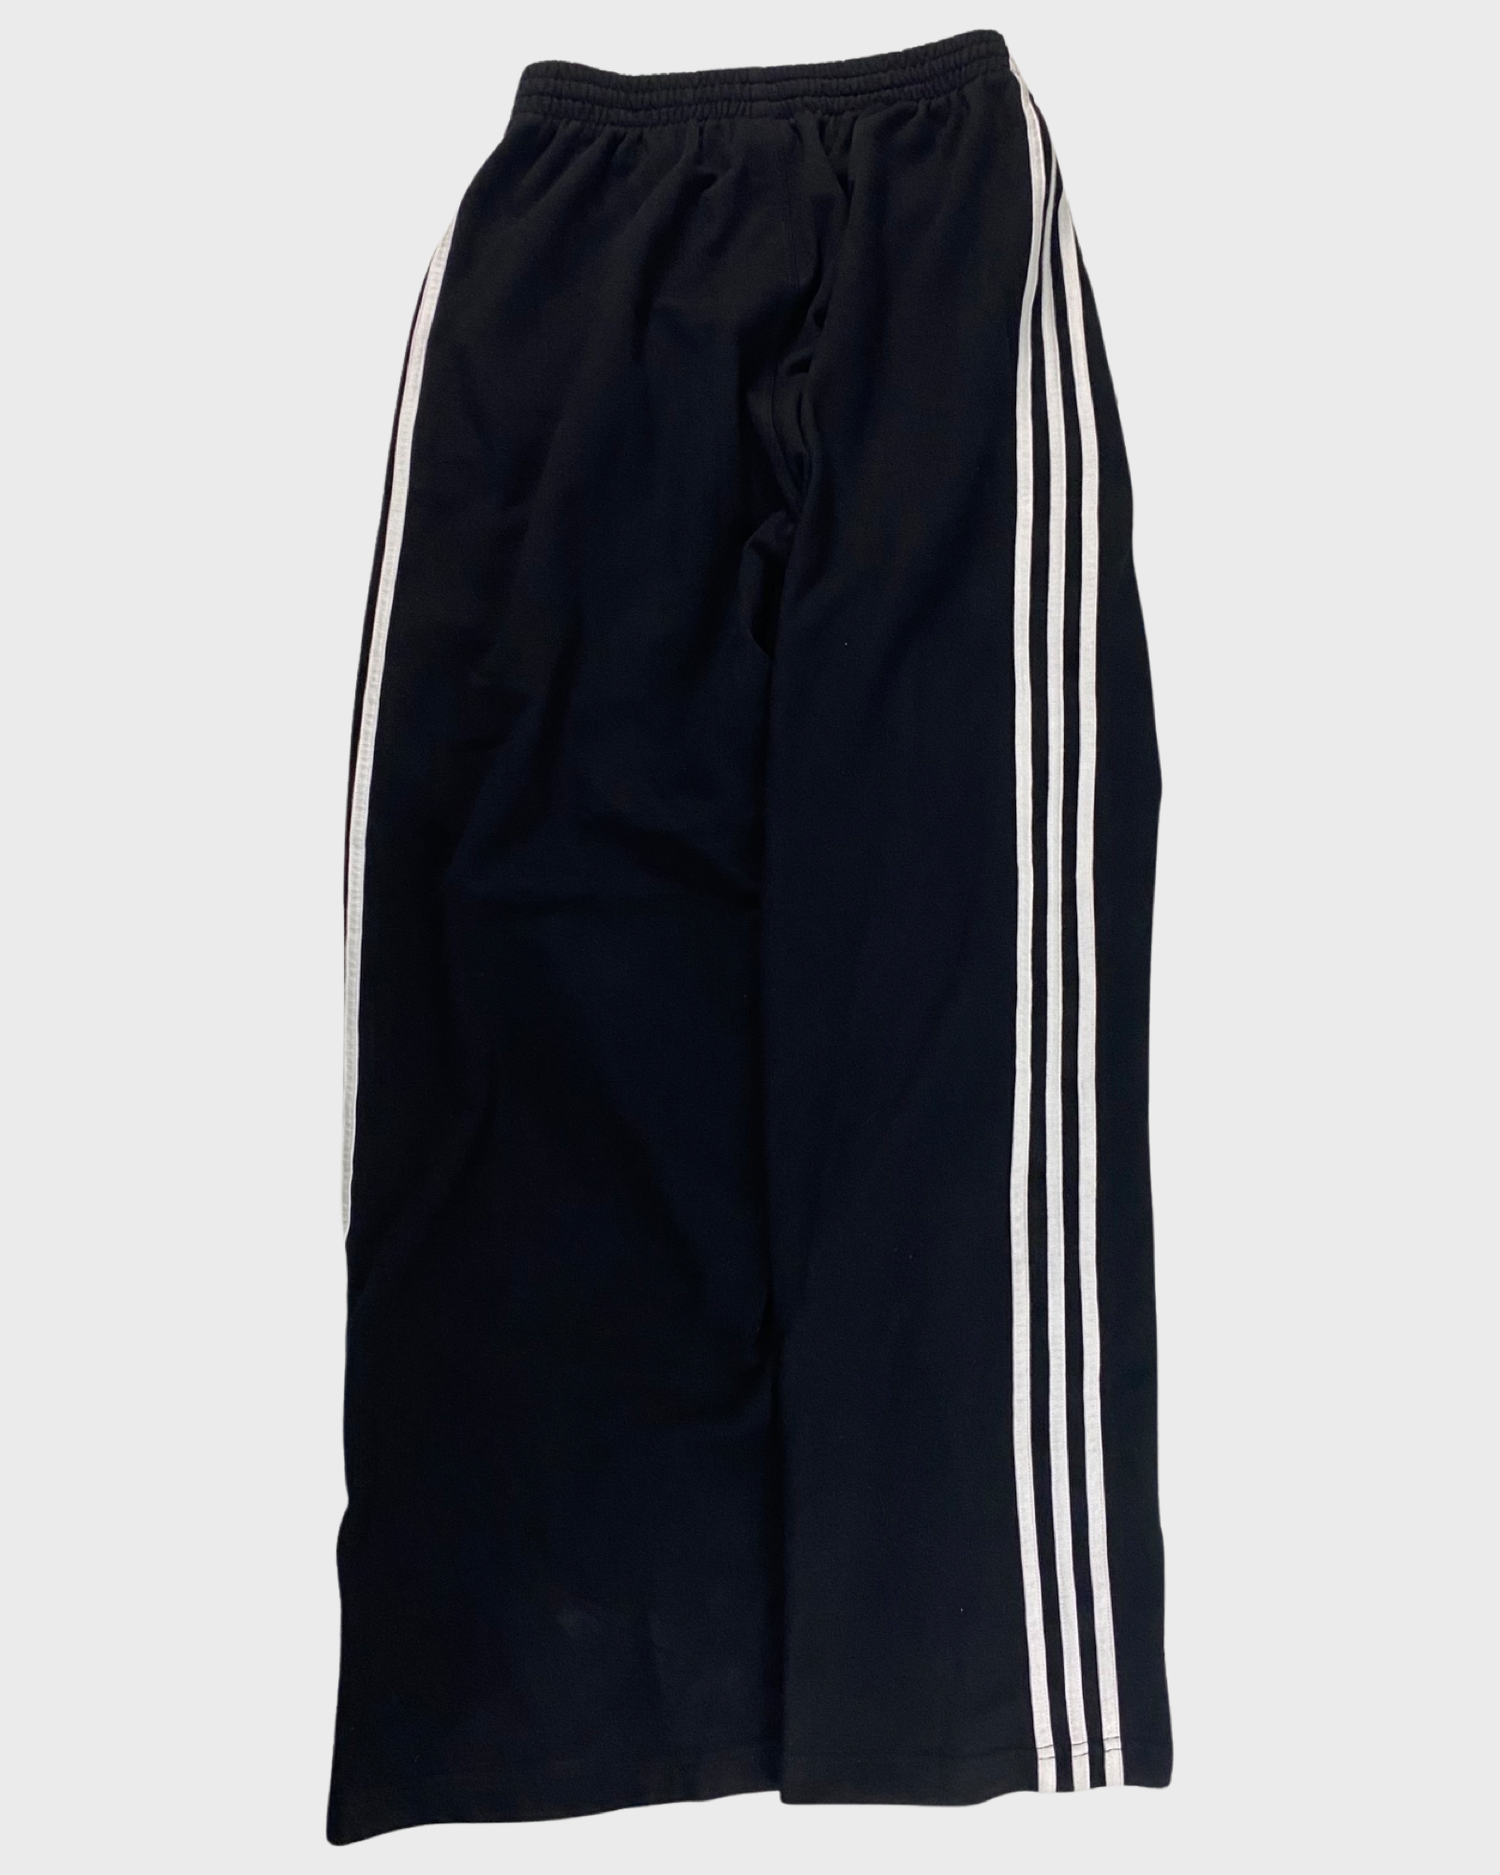 Balenciaga x Adidas Spring23 NYC Show long baggy sweatpants in